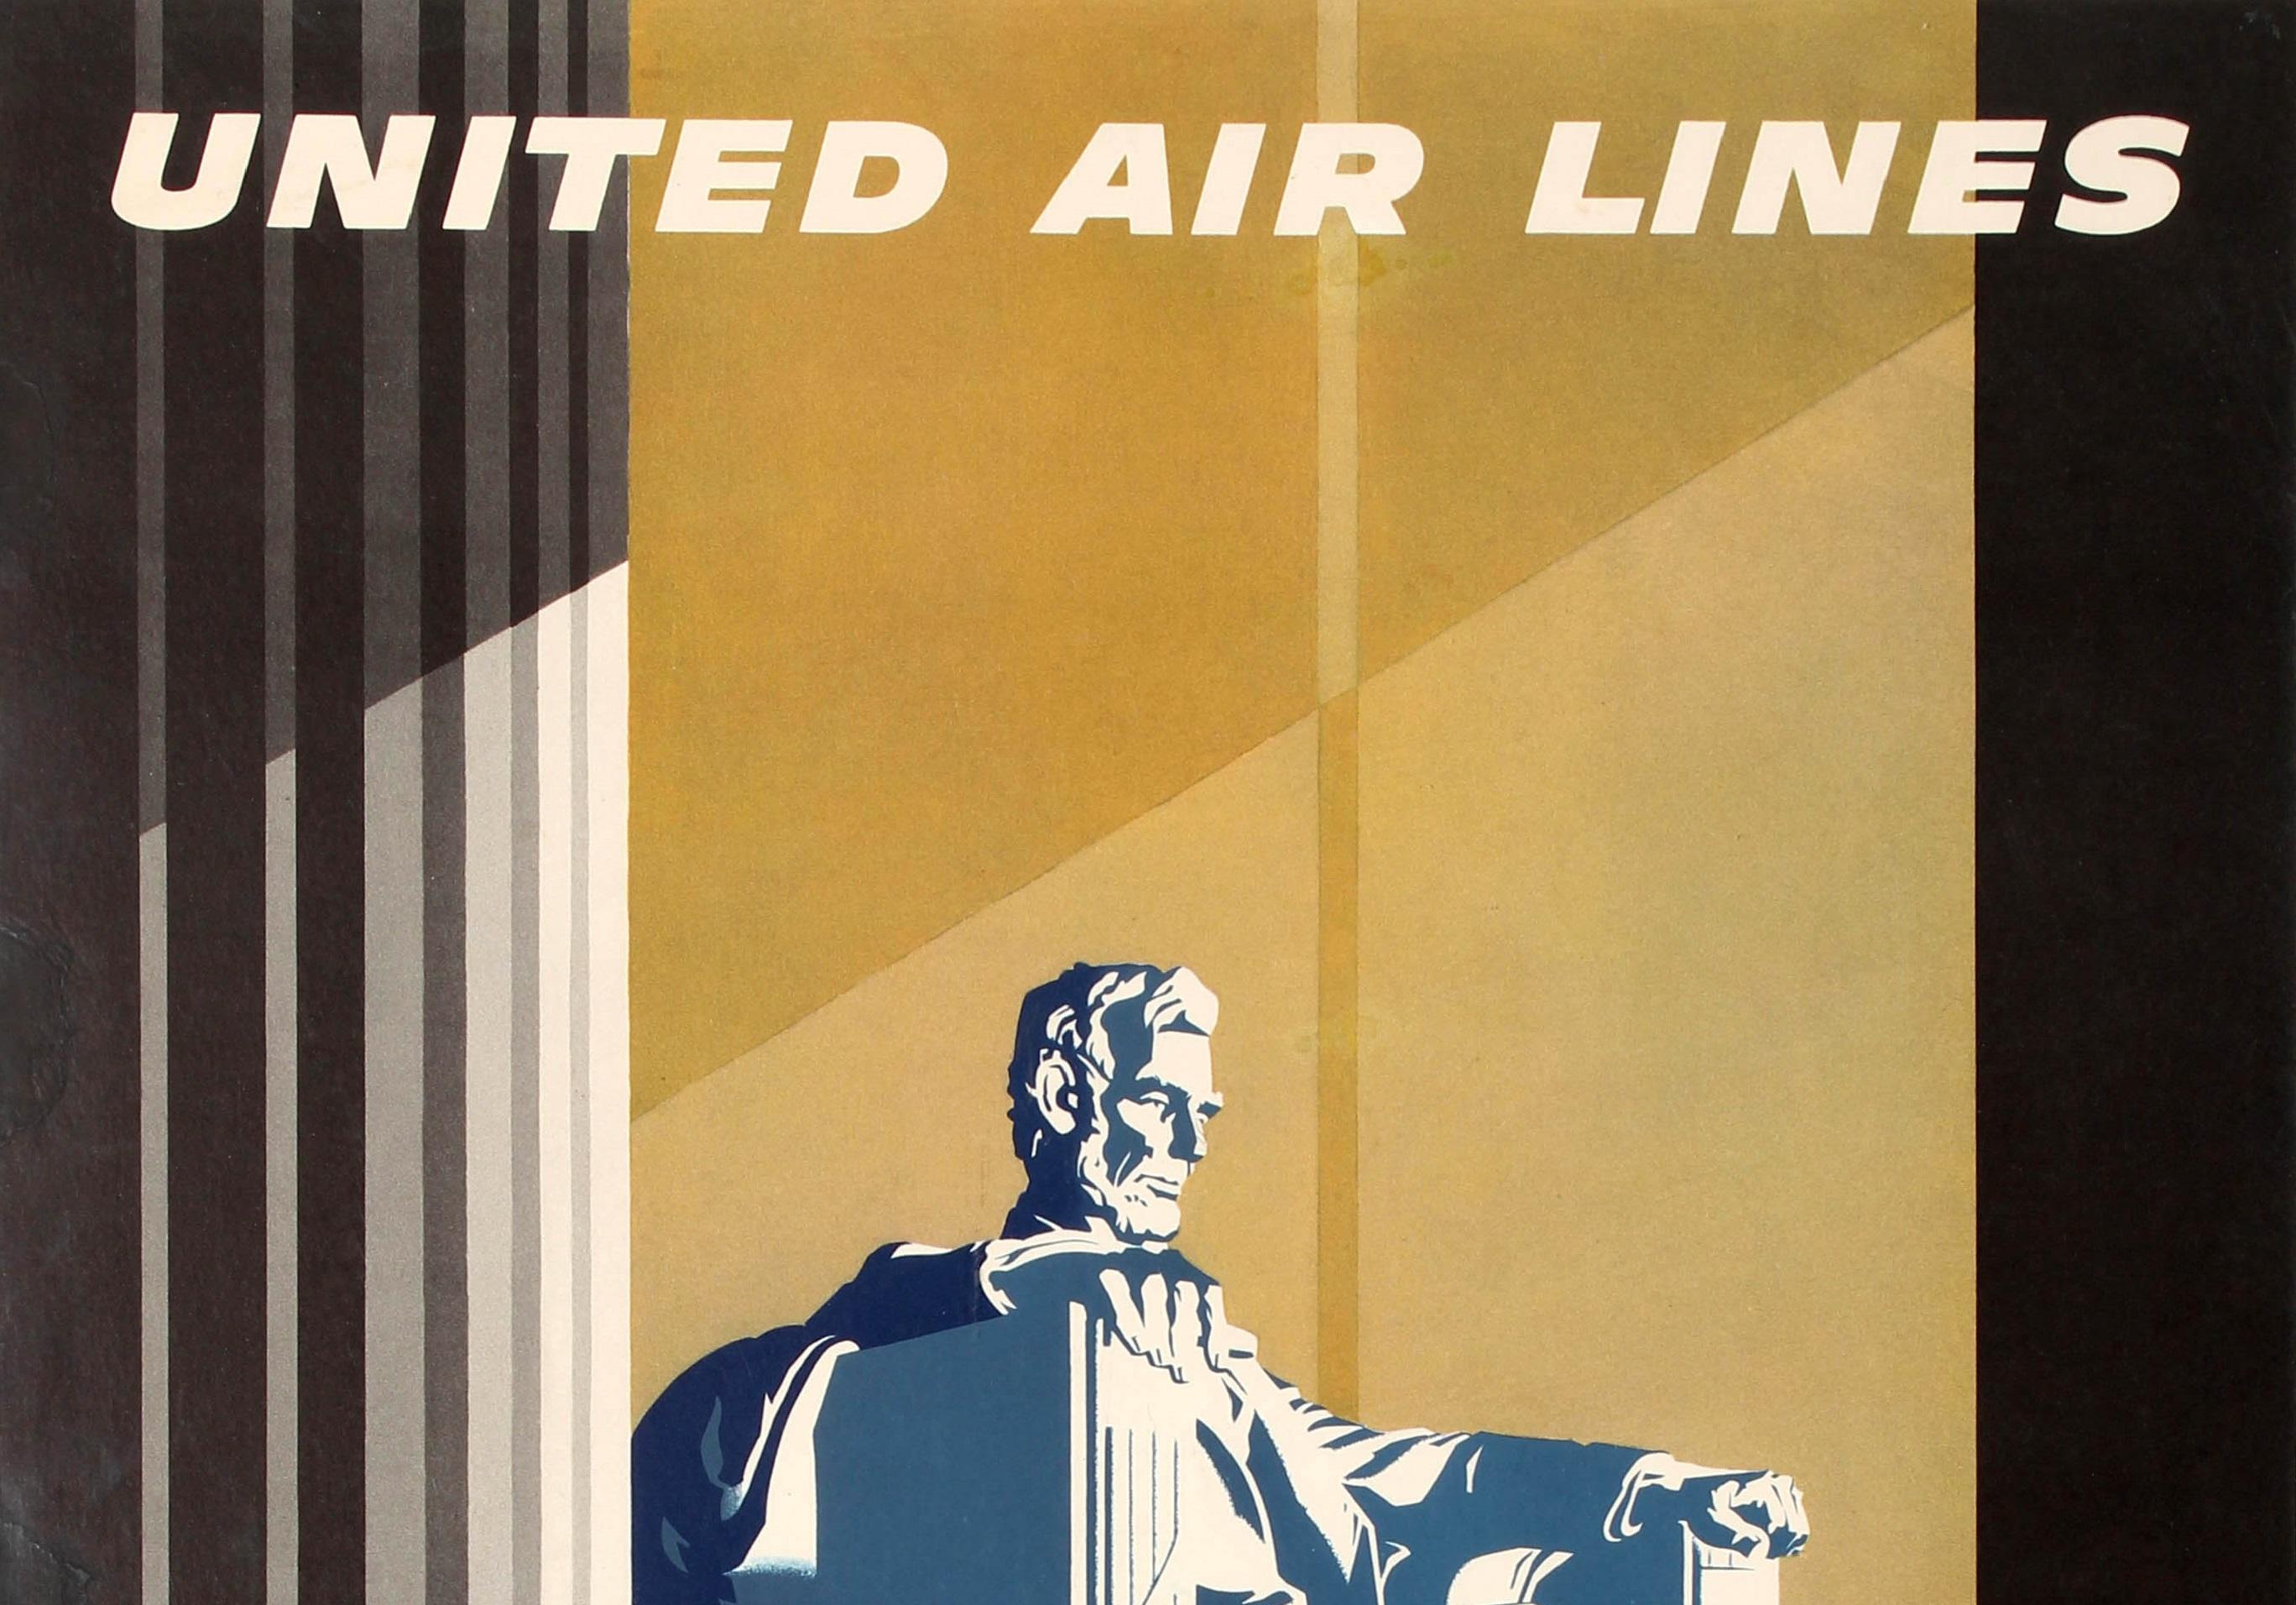 Original Vintage Travel Poster United Air Lines Washington D.C. Lincoln Memorial - Print by Joseph Binder